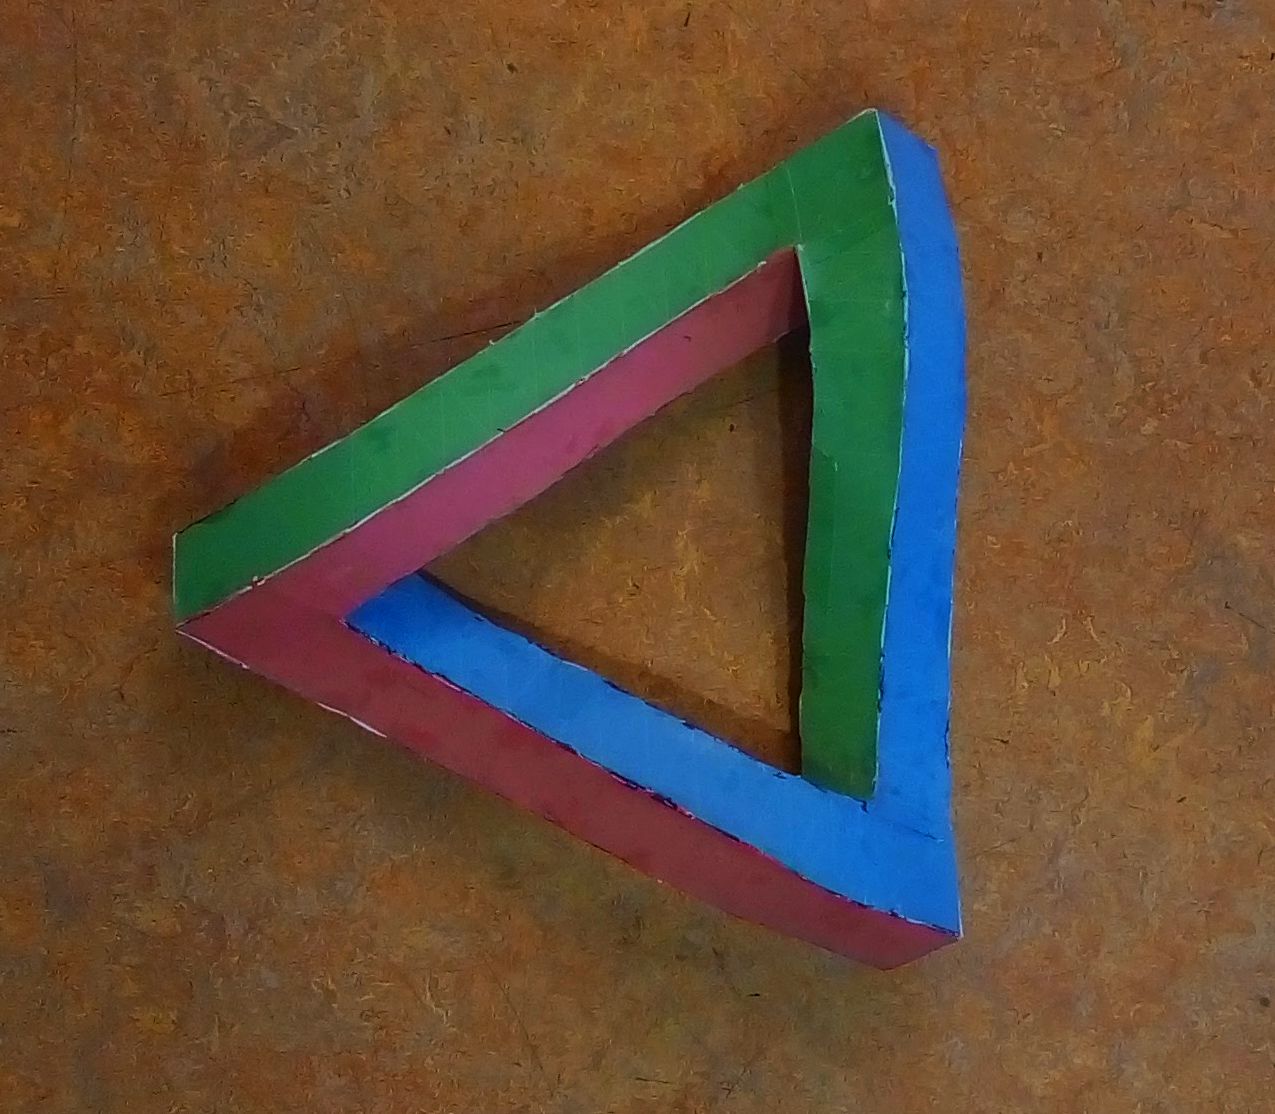 Penrose impossible triangle